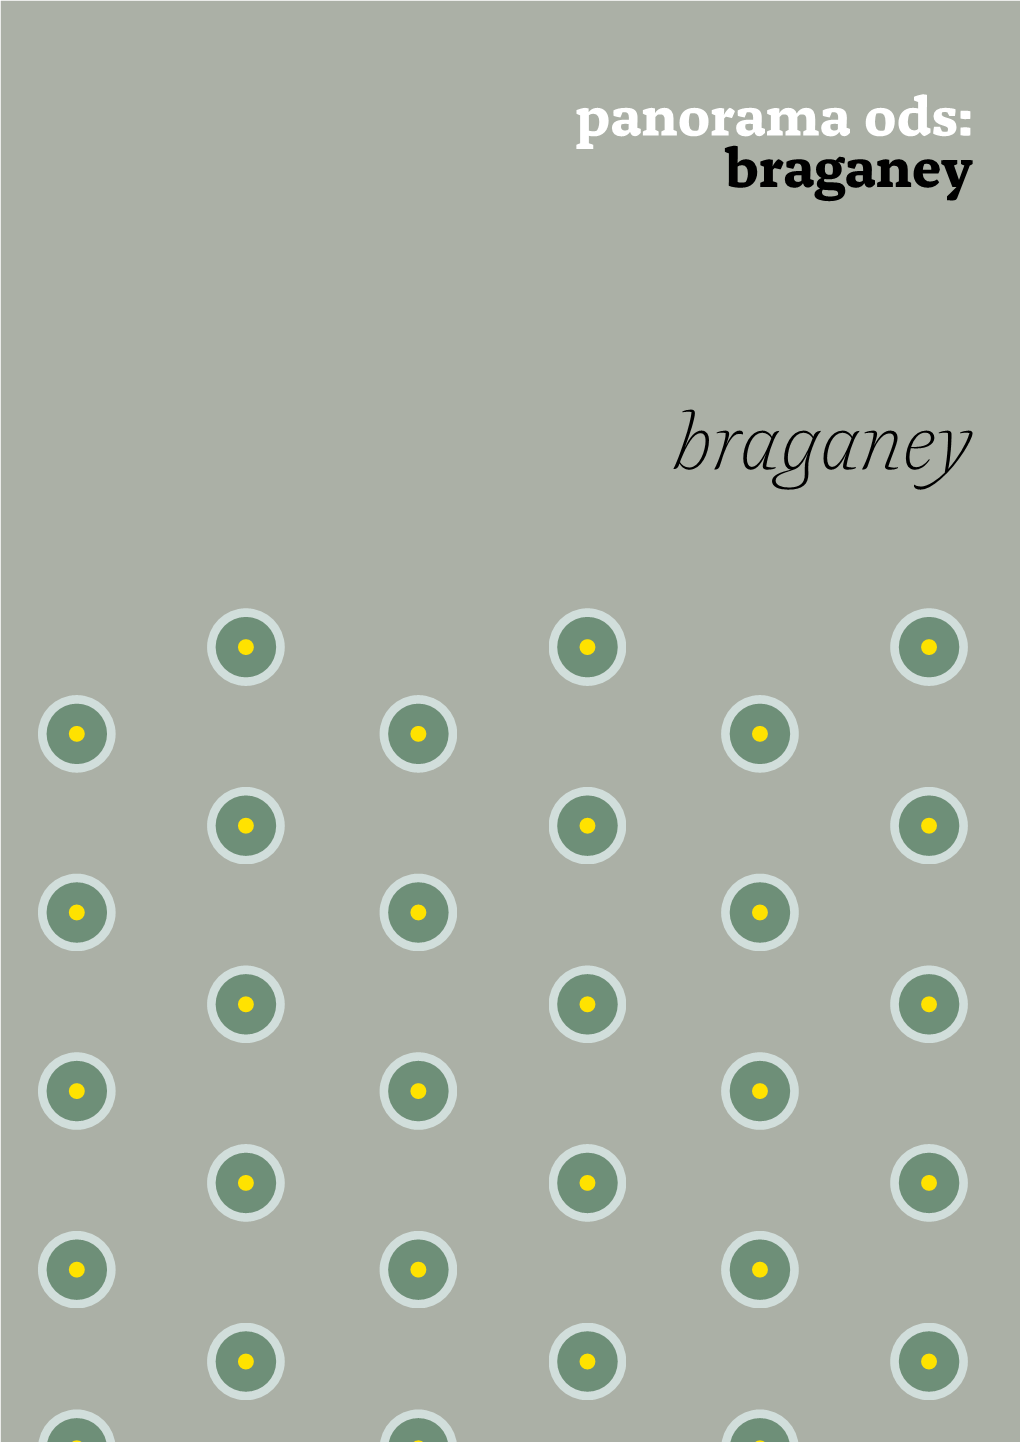 Braganey 1 Panorama Ods: Braganey